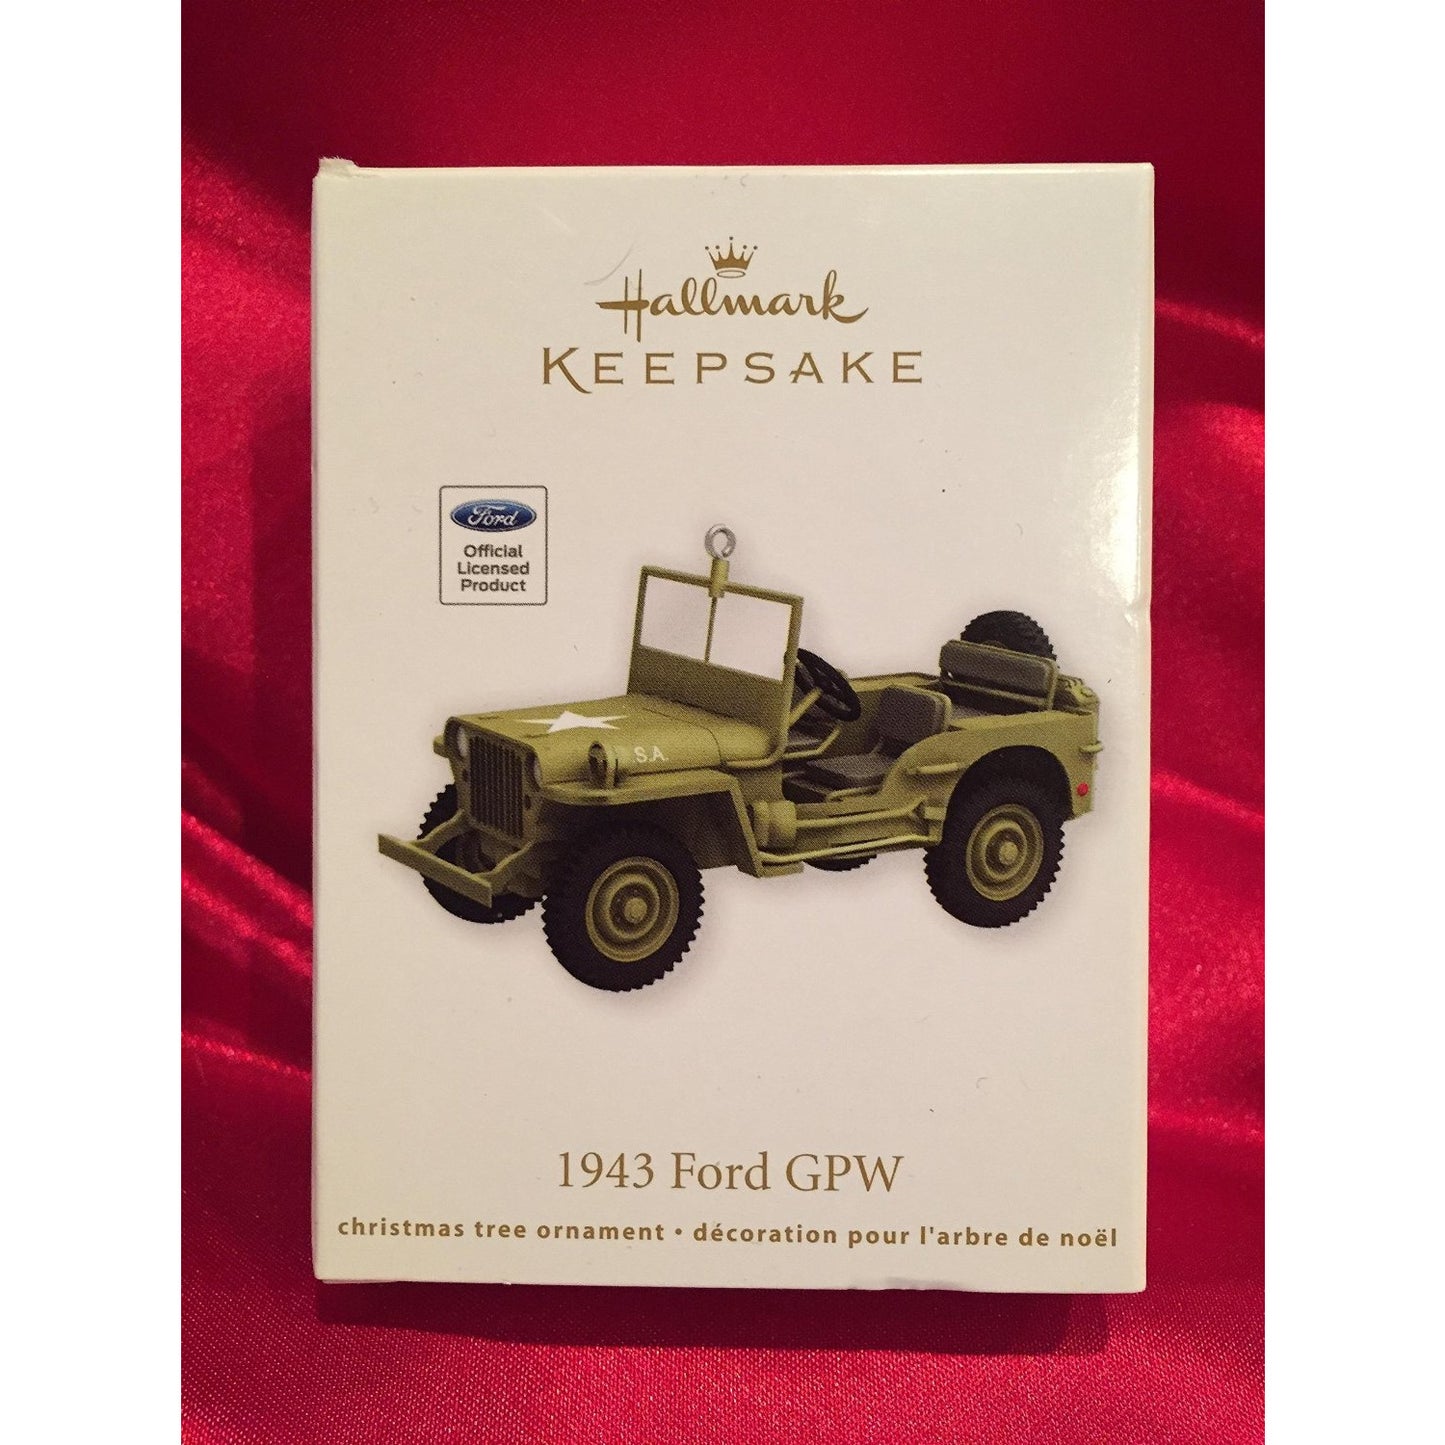 QXI2074 1943 Ford GPW Army Jeep 2012 Hallmark Keepsake Ornament